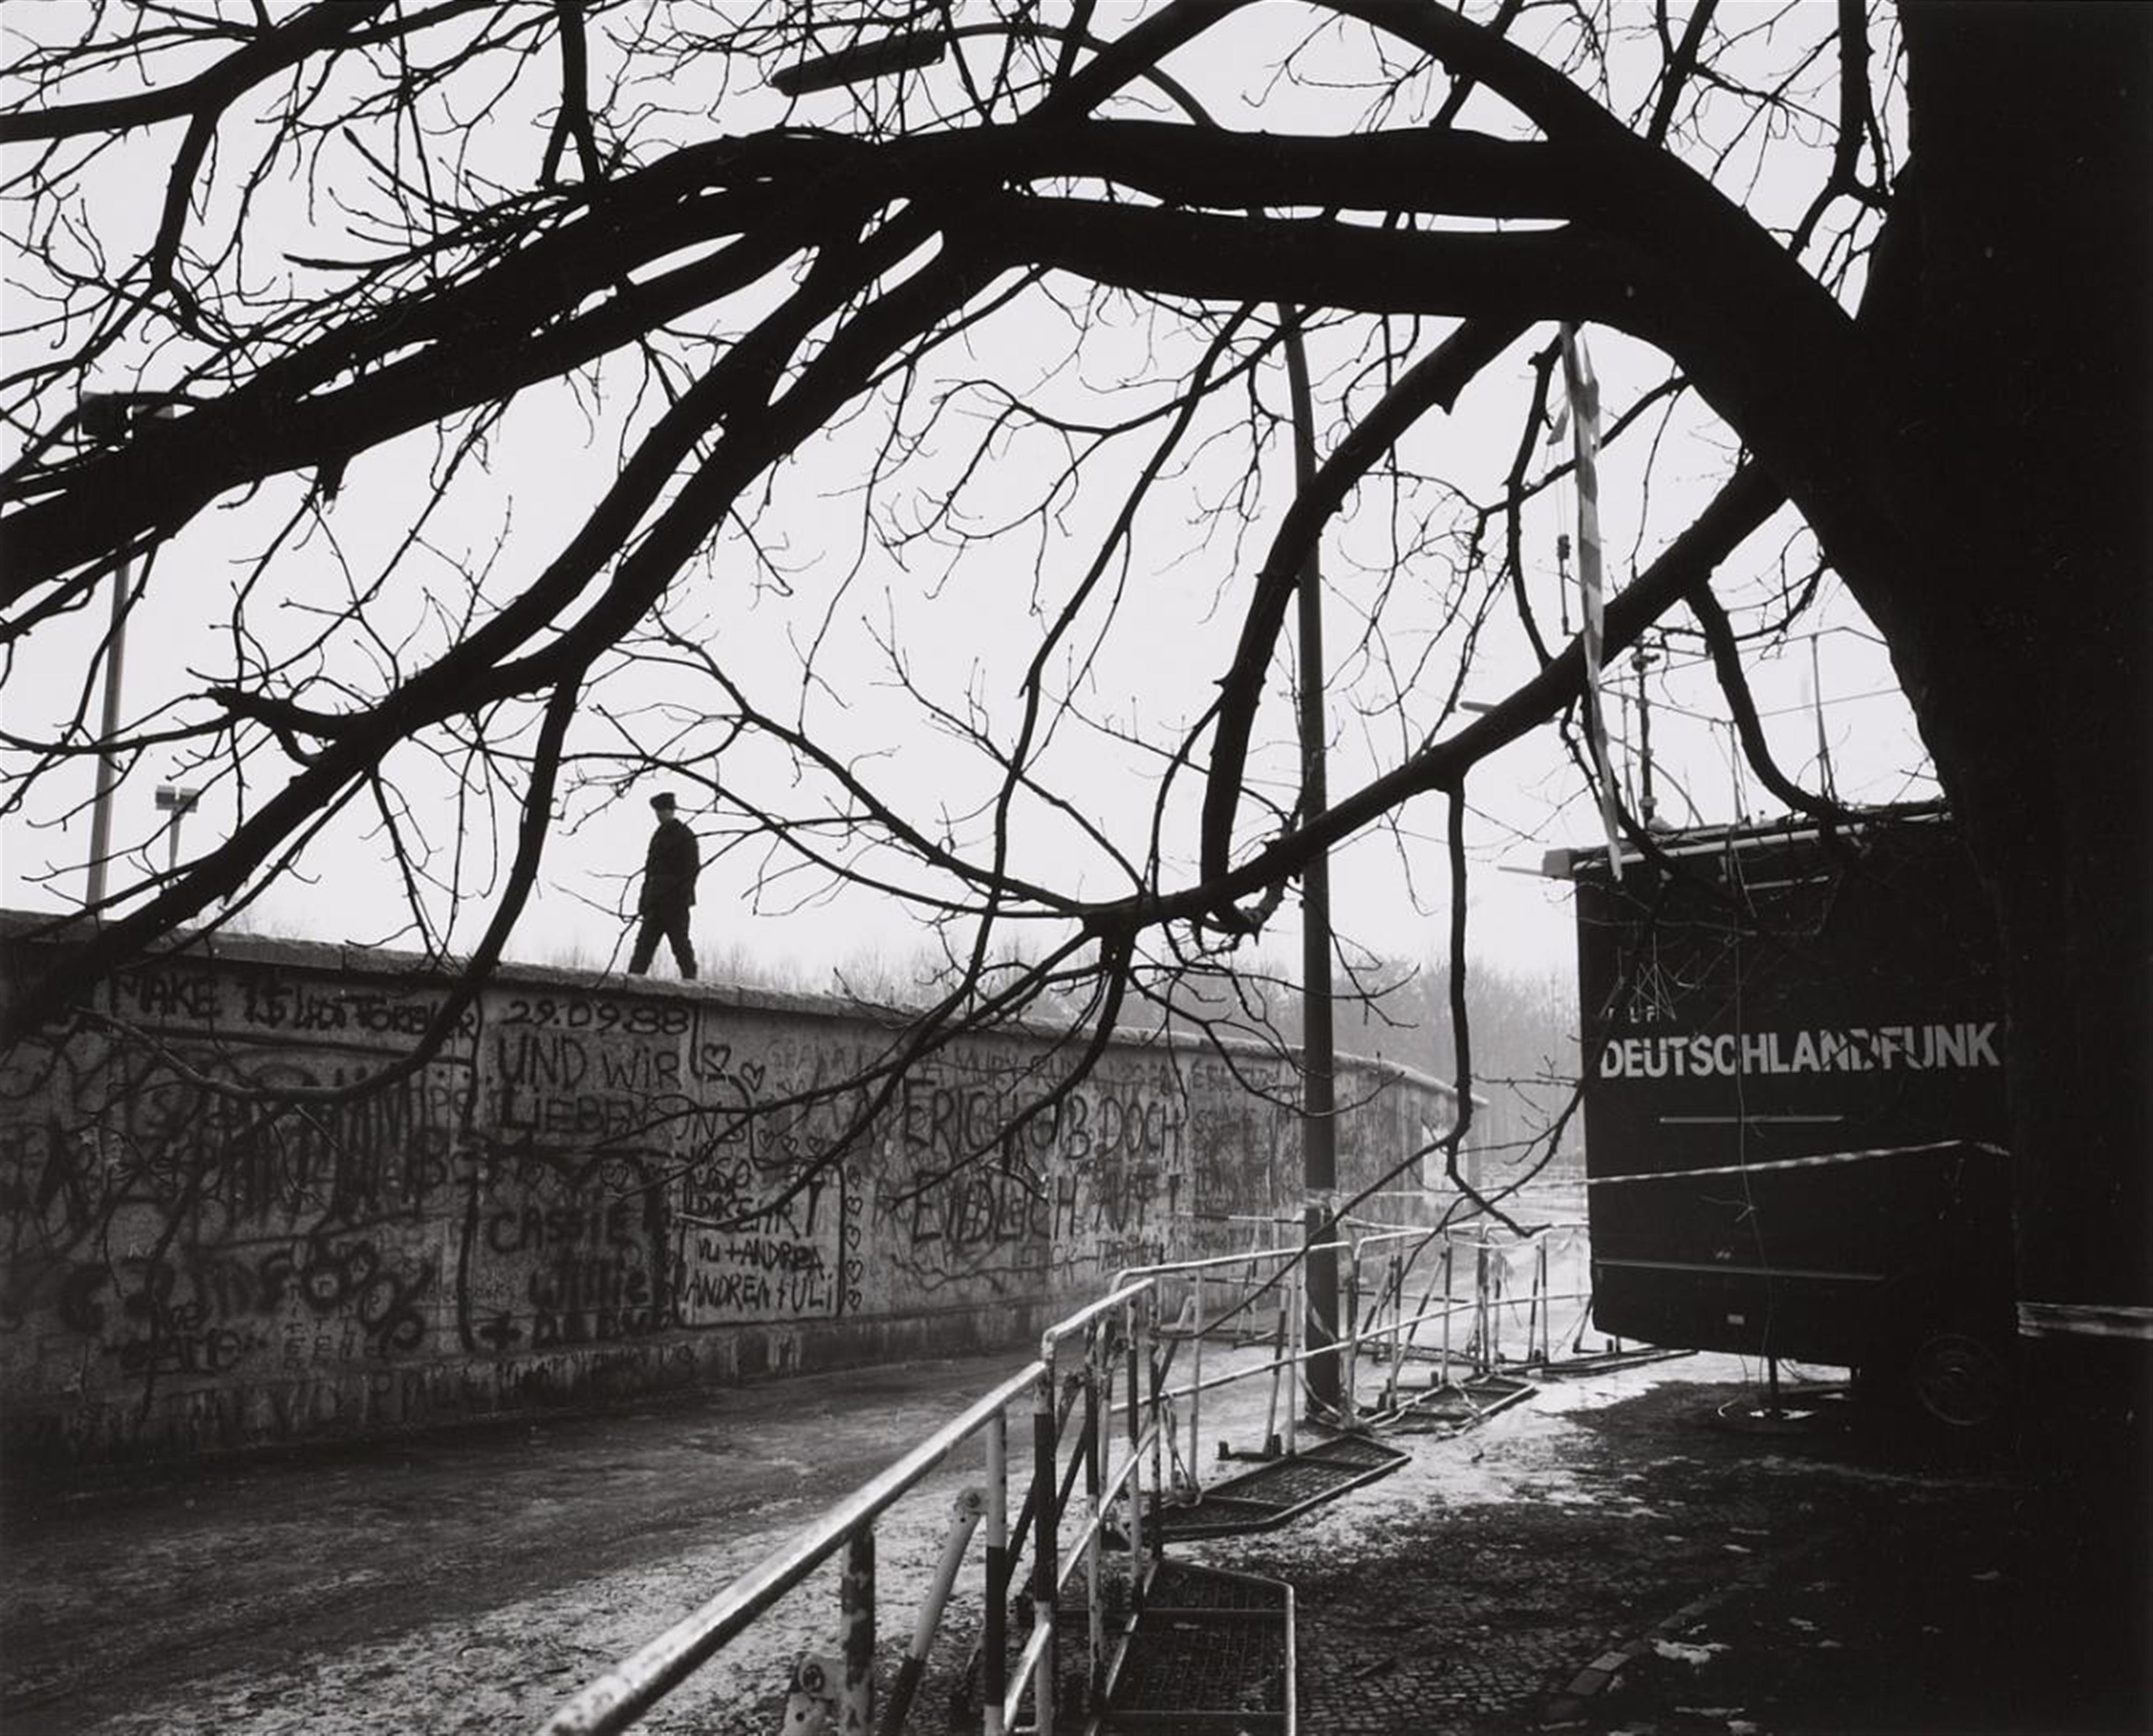 Thomas Lüttge - Deutschlandfunk I, Berlin Wall - image-1